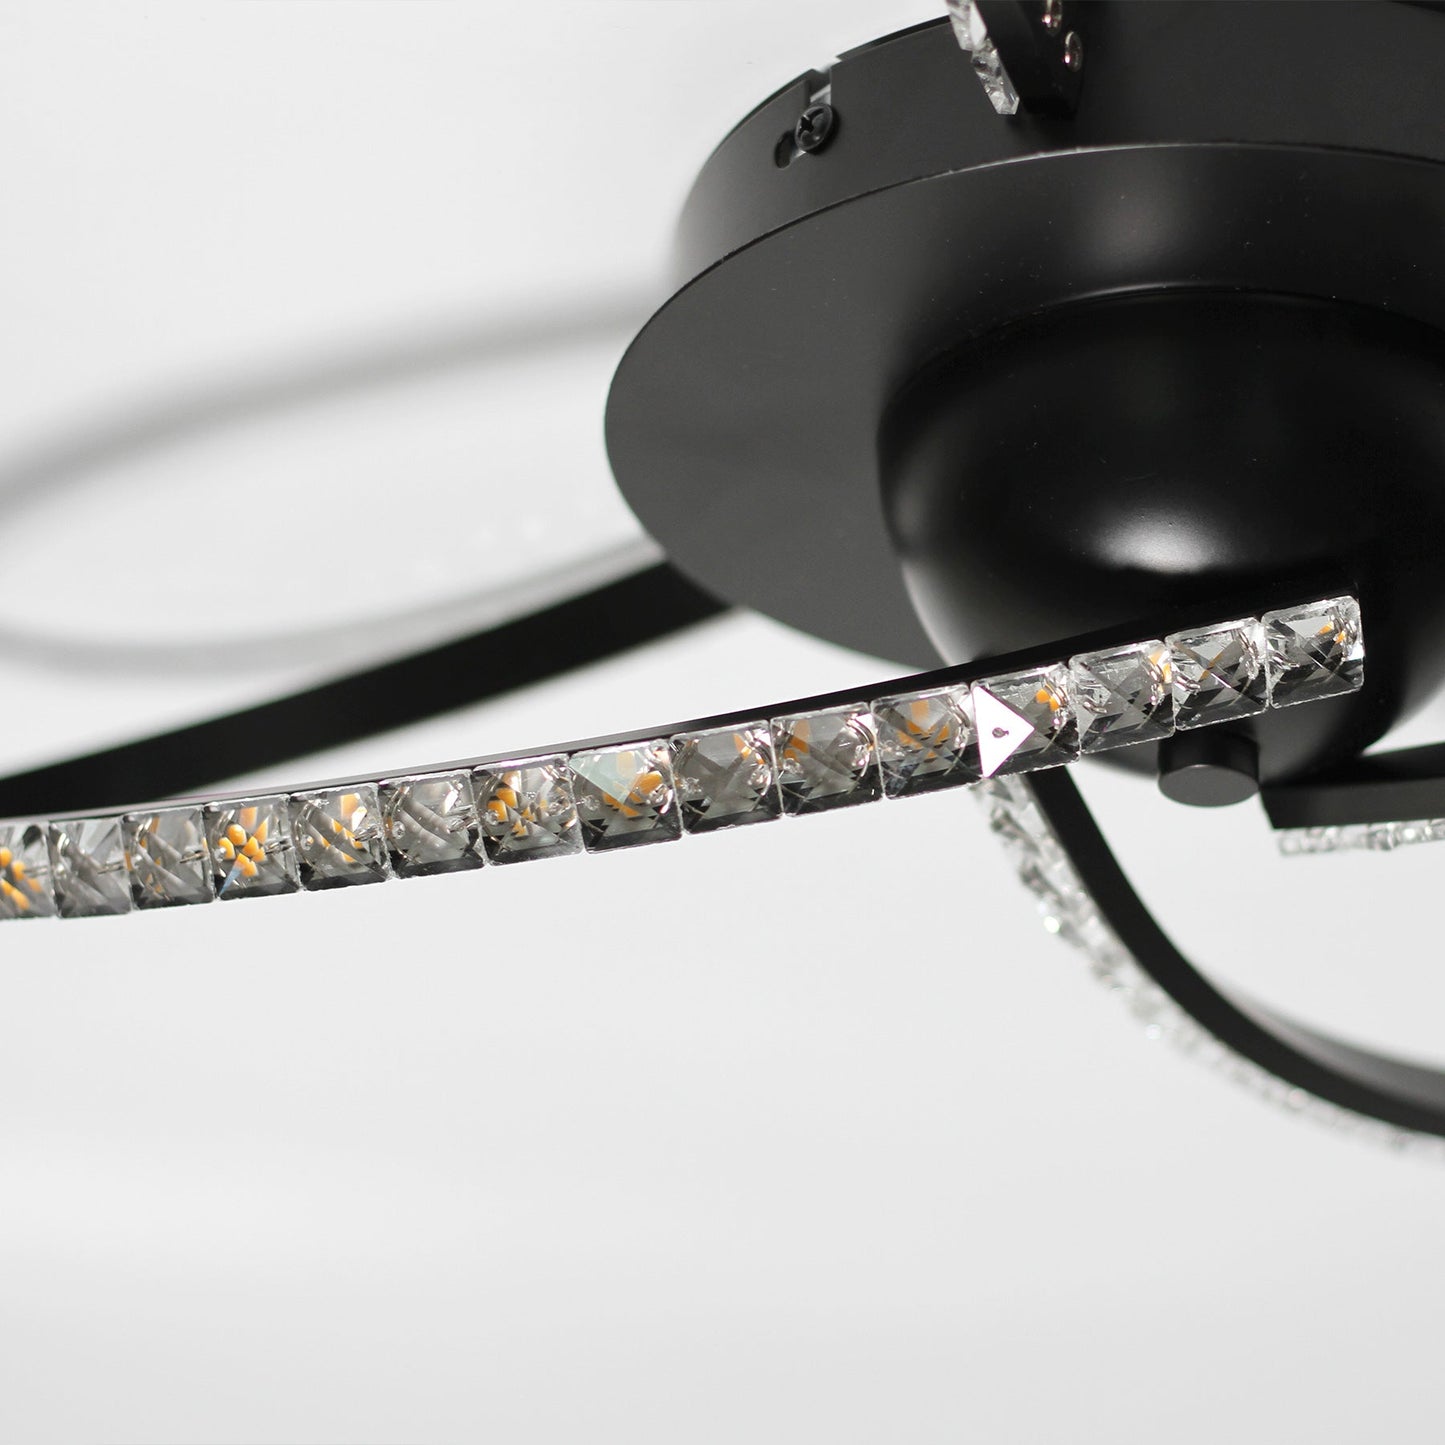 Irie Dimmable 3 Lights LED Ceiling Light - Black